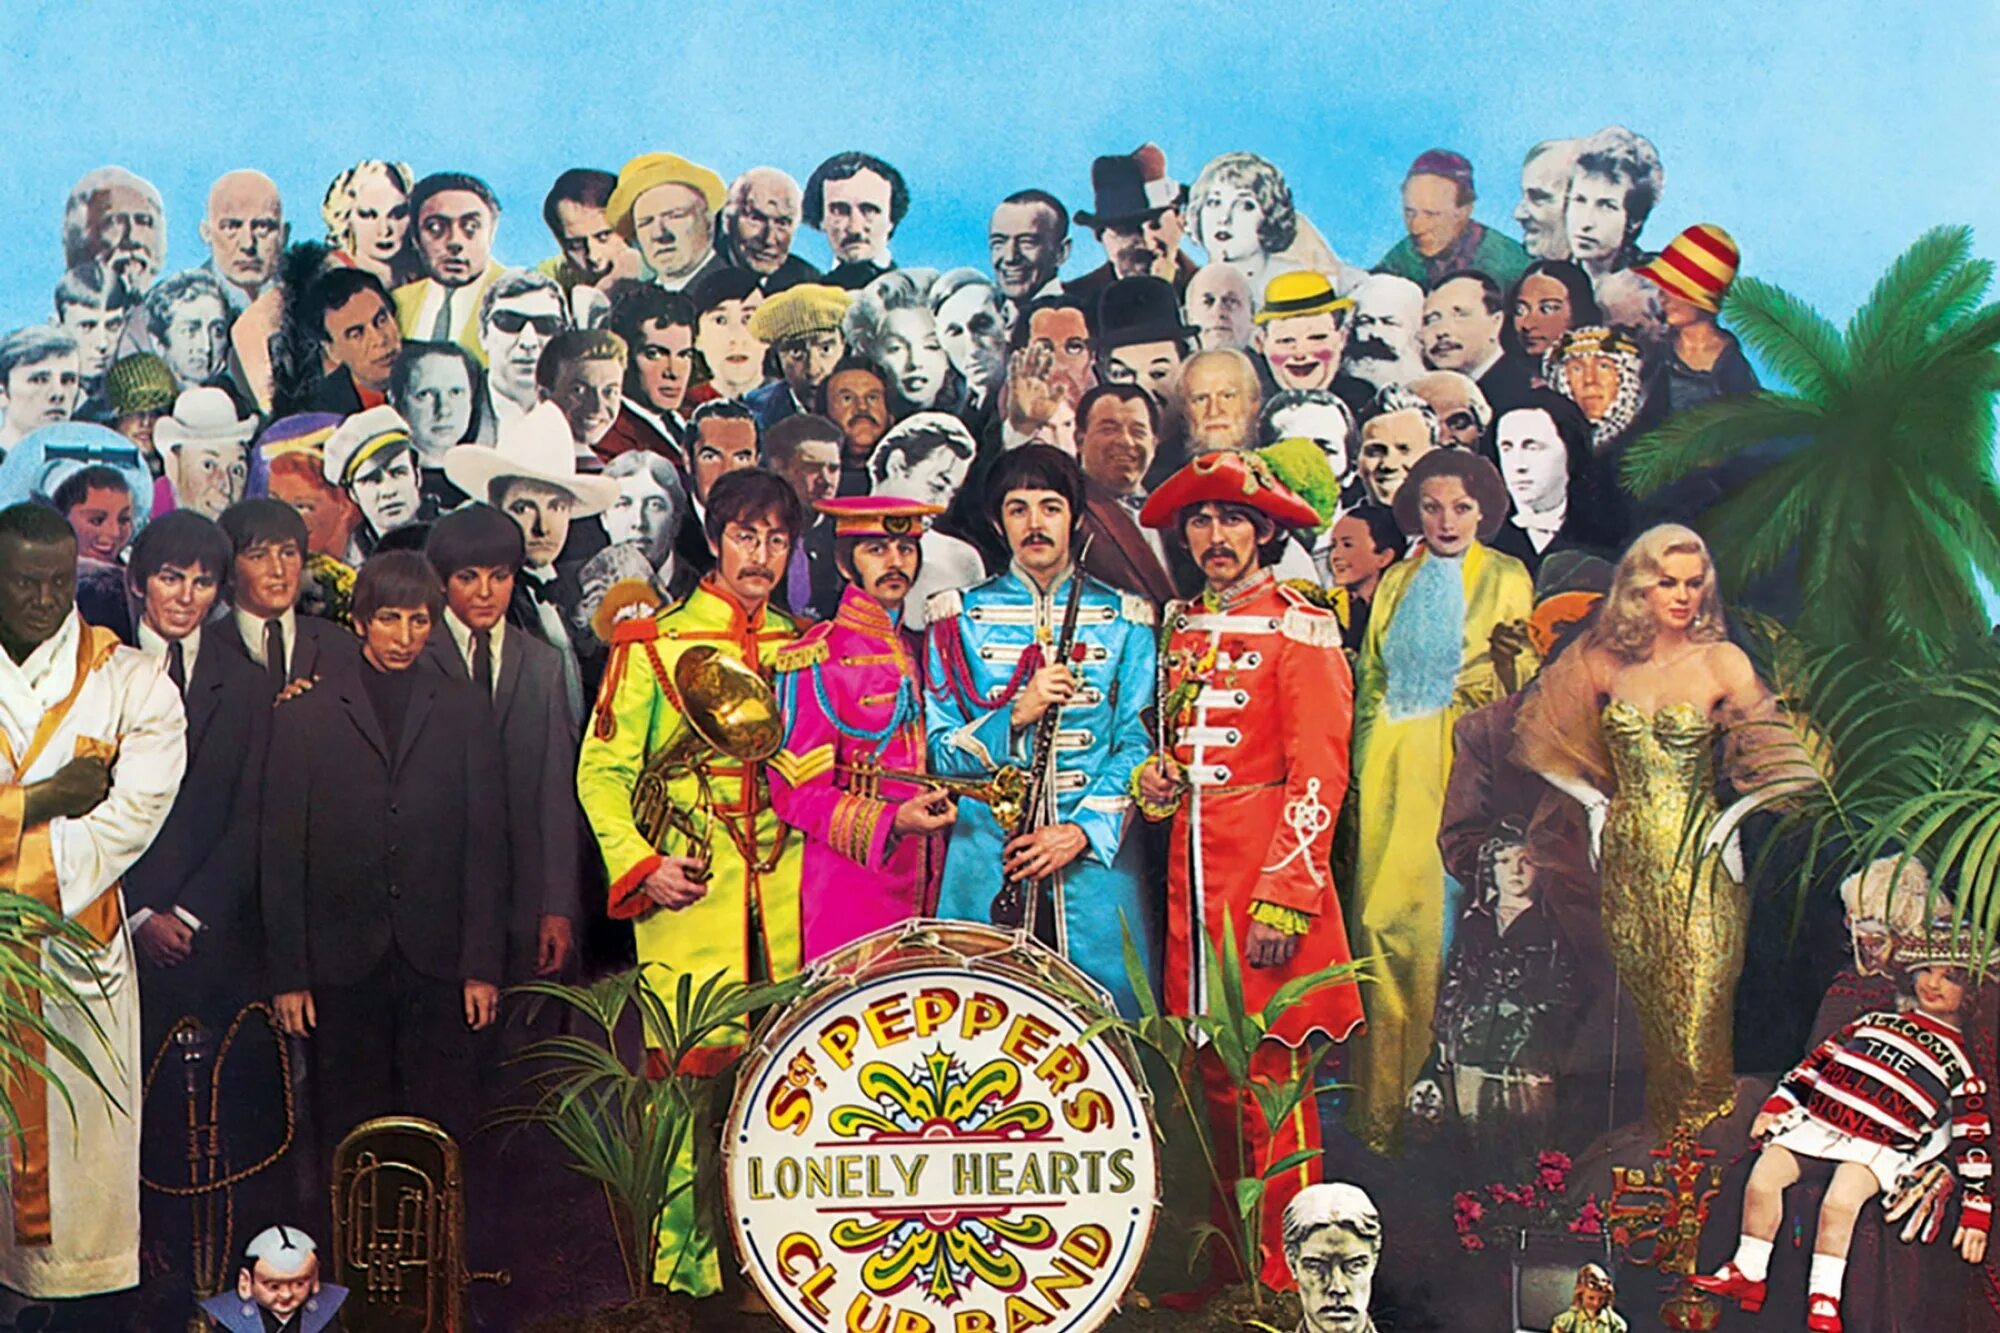 Beatles sgt pepper lonely. Обложка альбома Битлз клуб одиноких сердец сержанта Пеппера. The Beatles сержант Пеппер. Sgt Pepper's Lonely Hearts Club Band обложка. Альбом Битлз Sgt Pepper s Lonely Hearts Club.